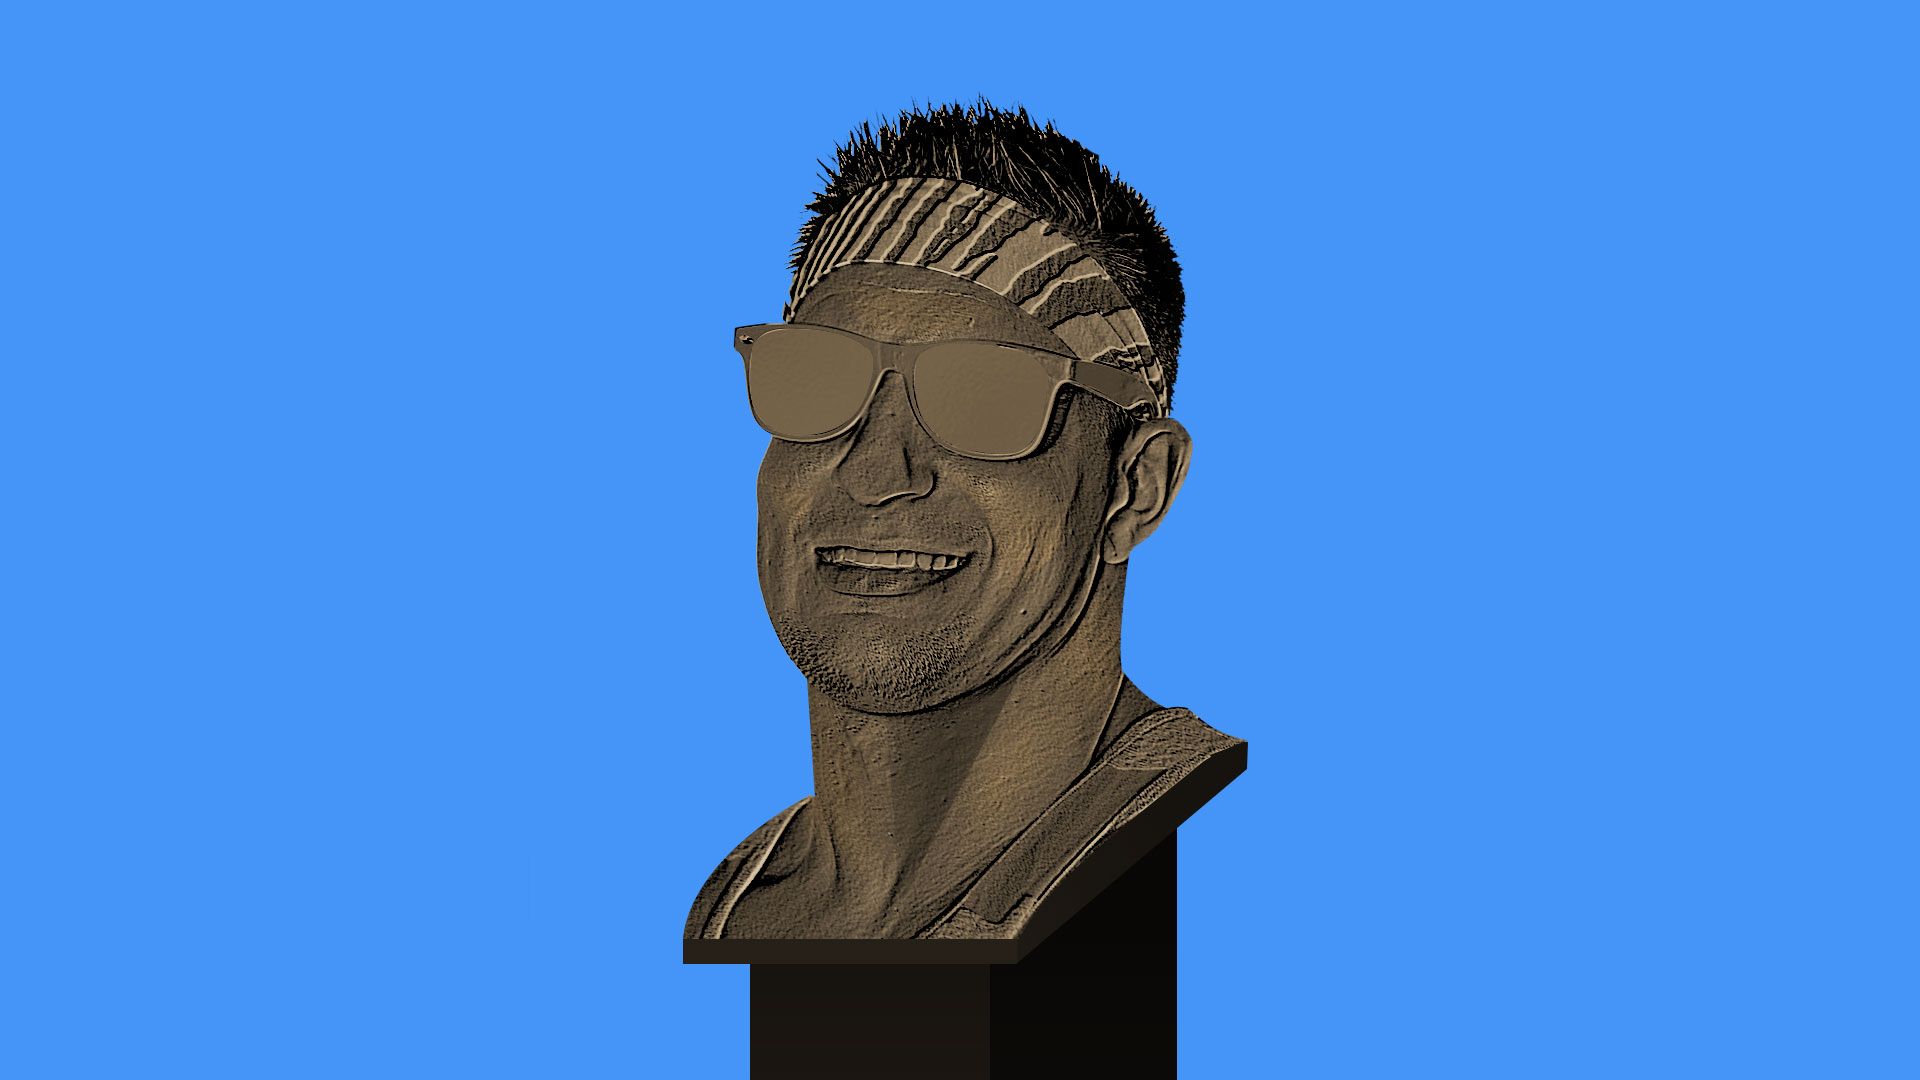 Rob Gronkowski's football HOF bust with sunglasses and bandana